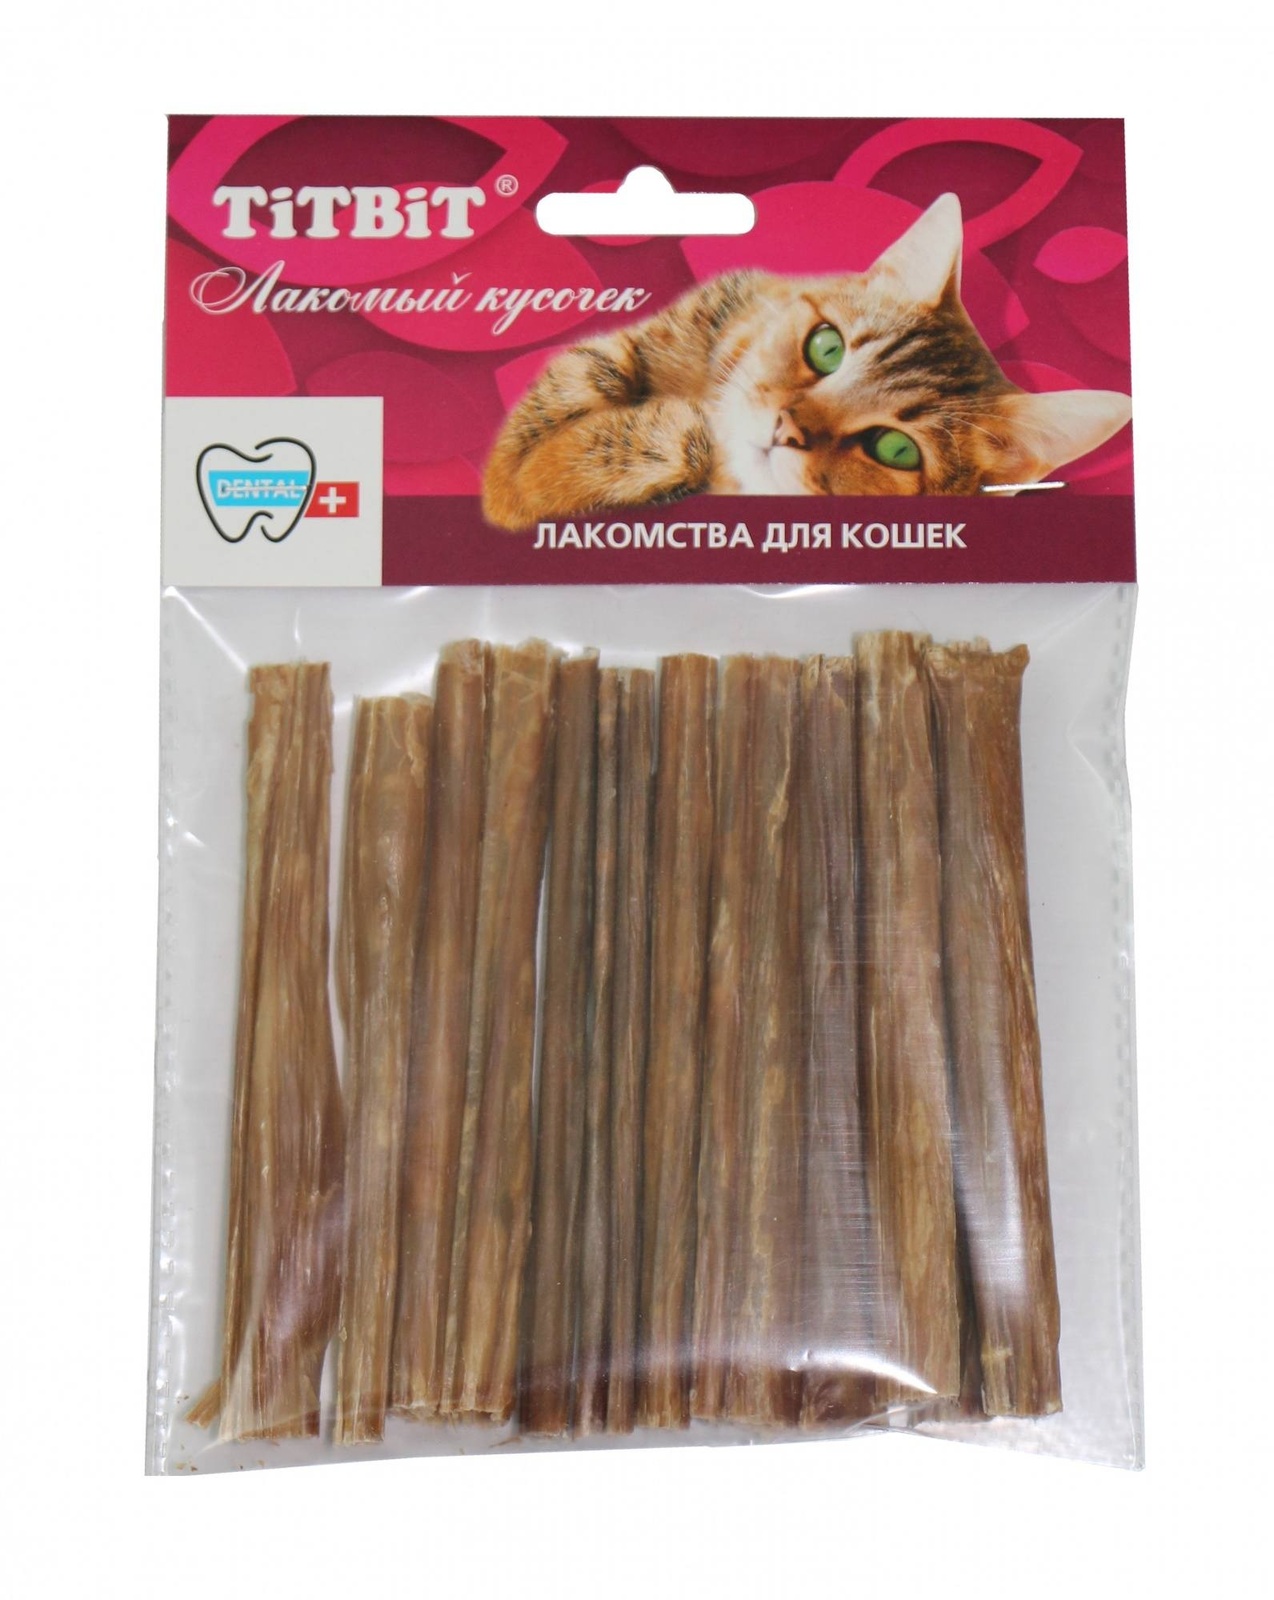 TiTBiT TiTBiT кишки говяжьи для кошек (32 г) titbit titbit кишки бараньи для кошек 35 г